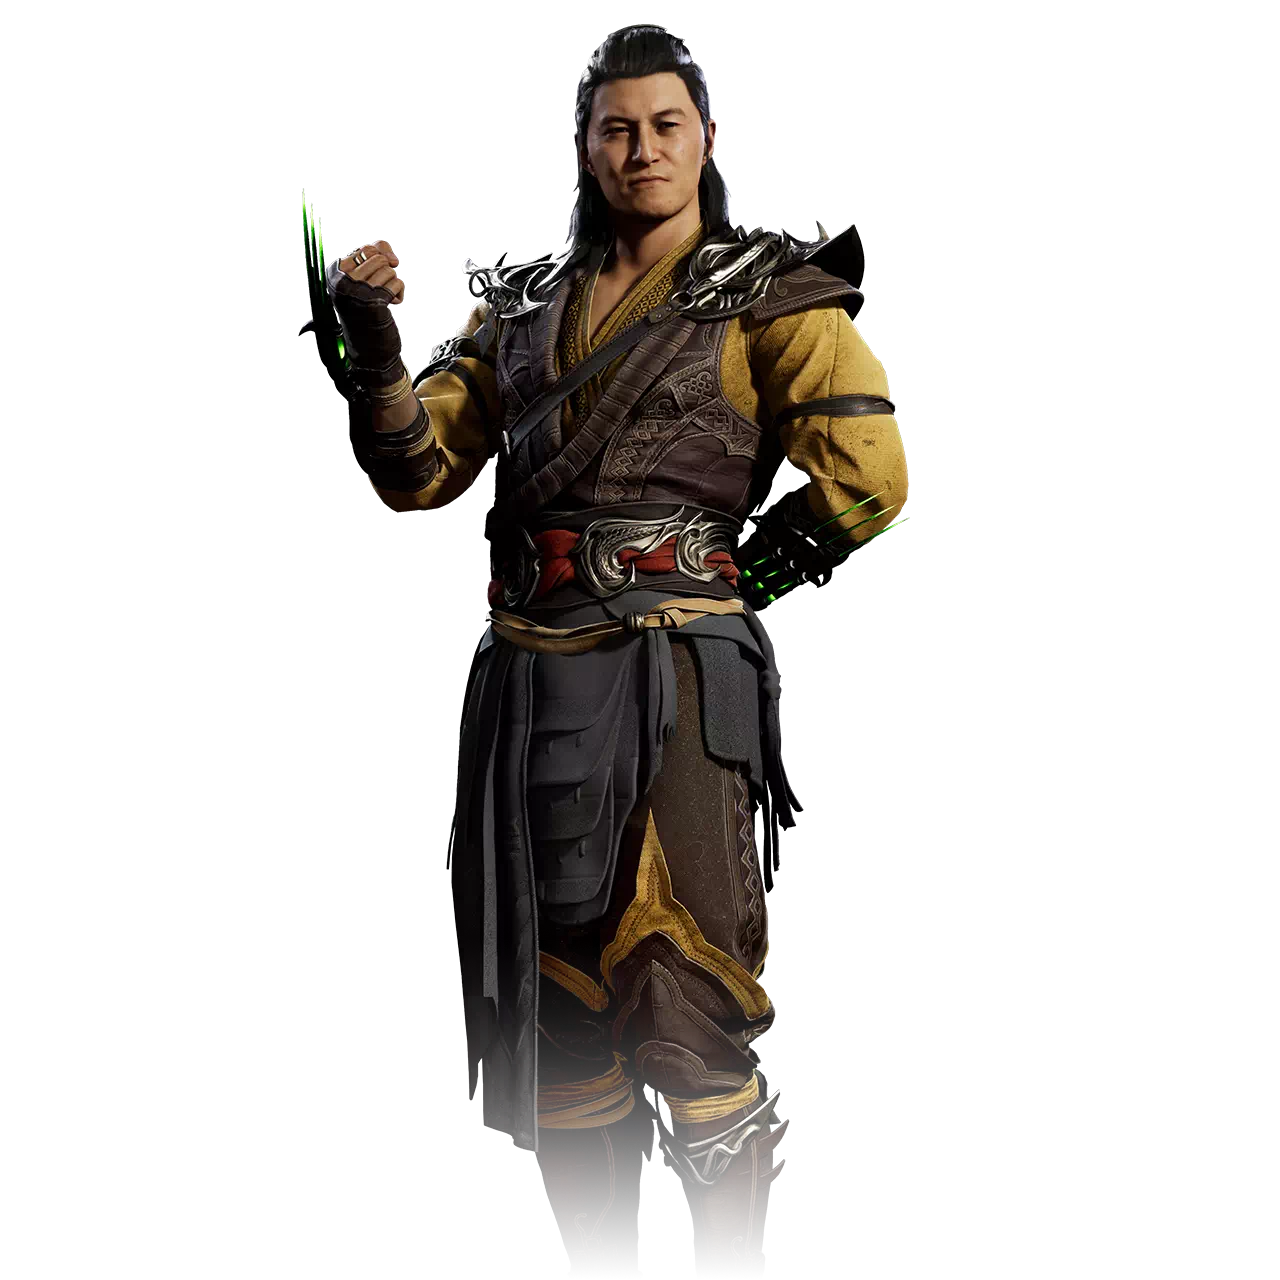 🐉 Mortal Kombat 1 + PREORDER BONUS 🔥 SHANG TSUNG Nintendo Switch 🆕 NEW  SEALED 883929808182